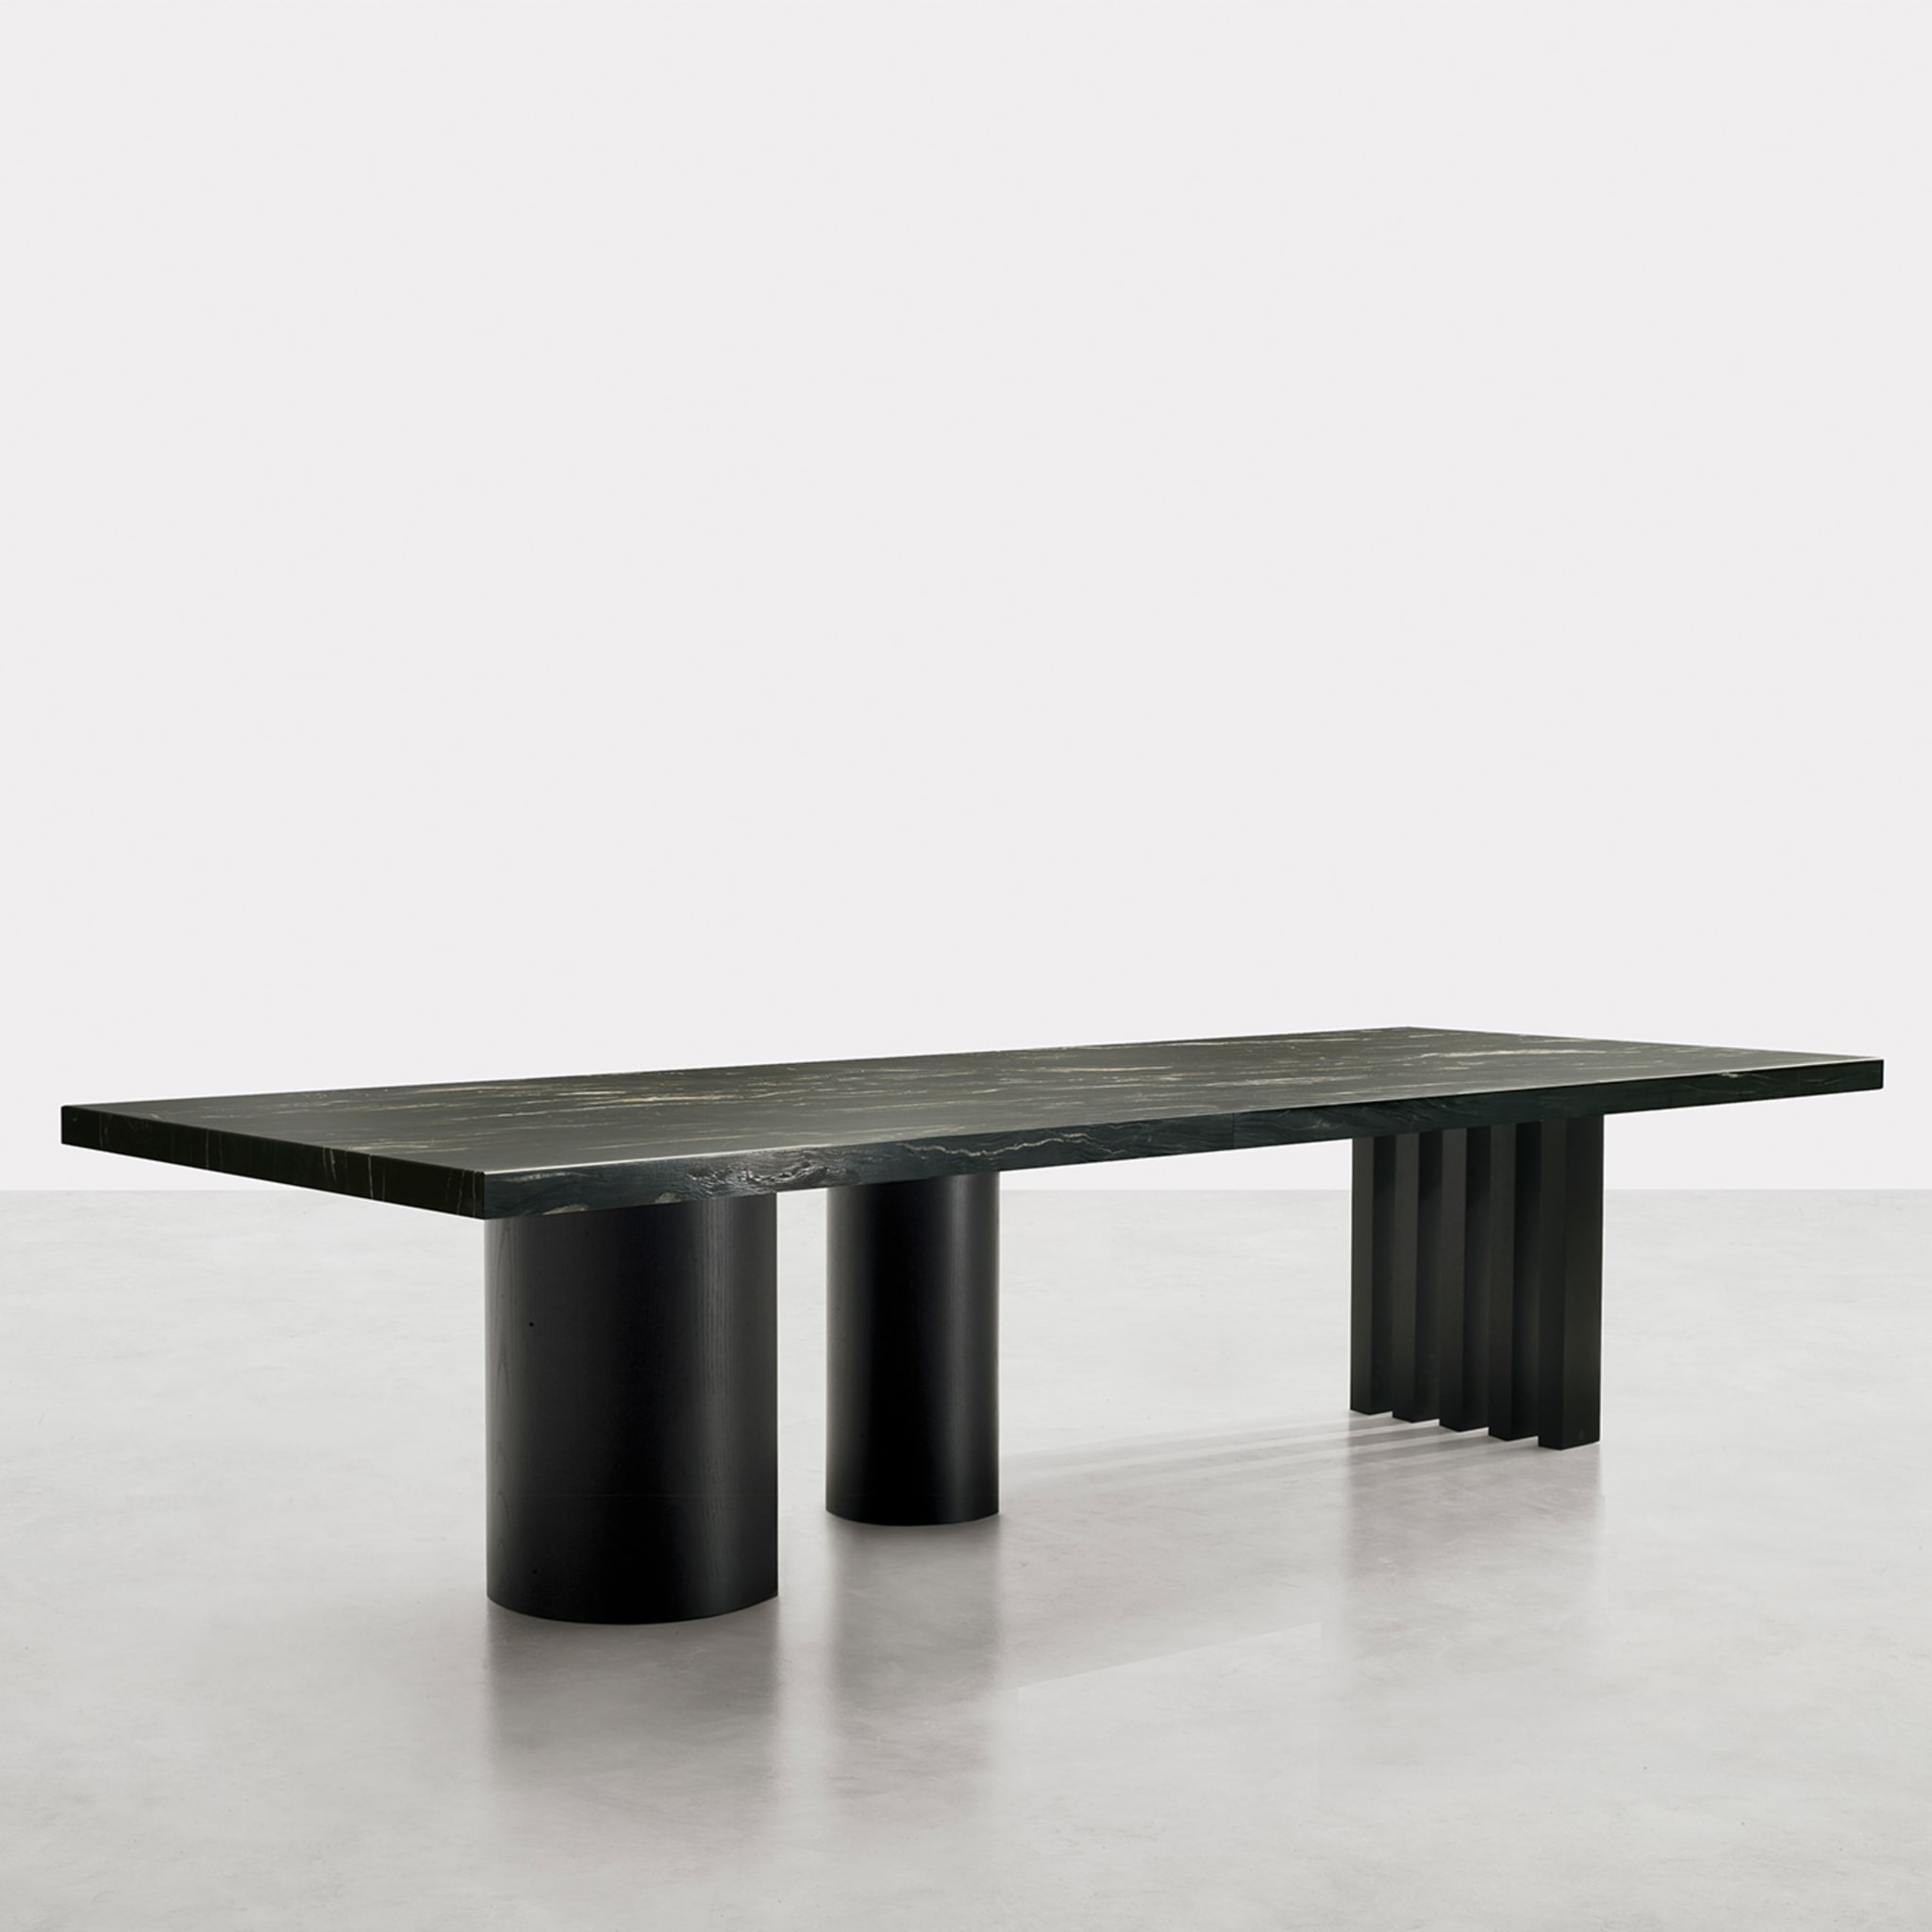 Ozark Rectangular Table by Dainelli Studio - Alternative view 1